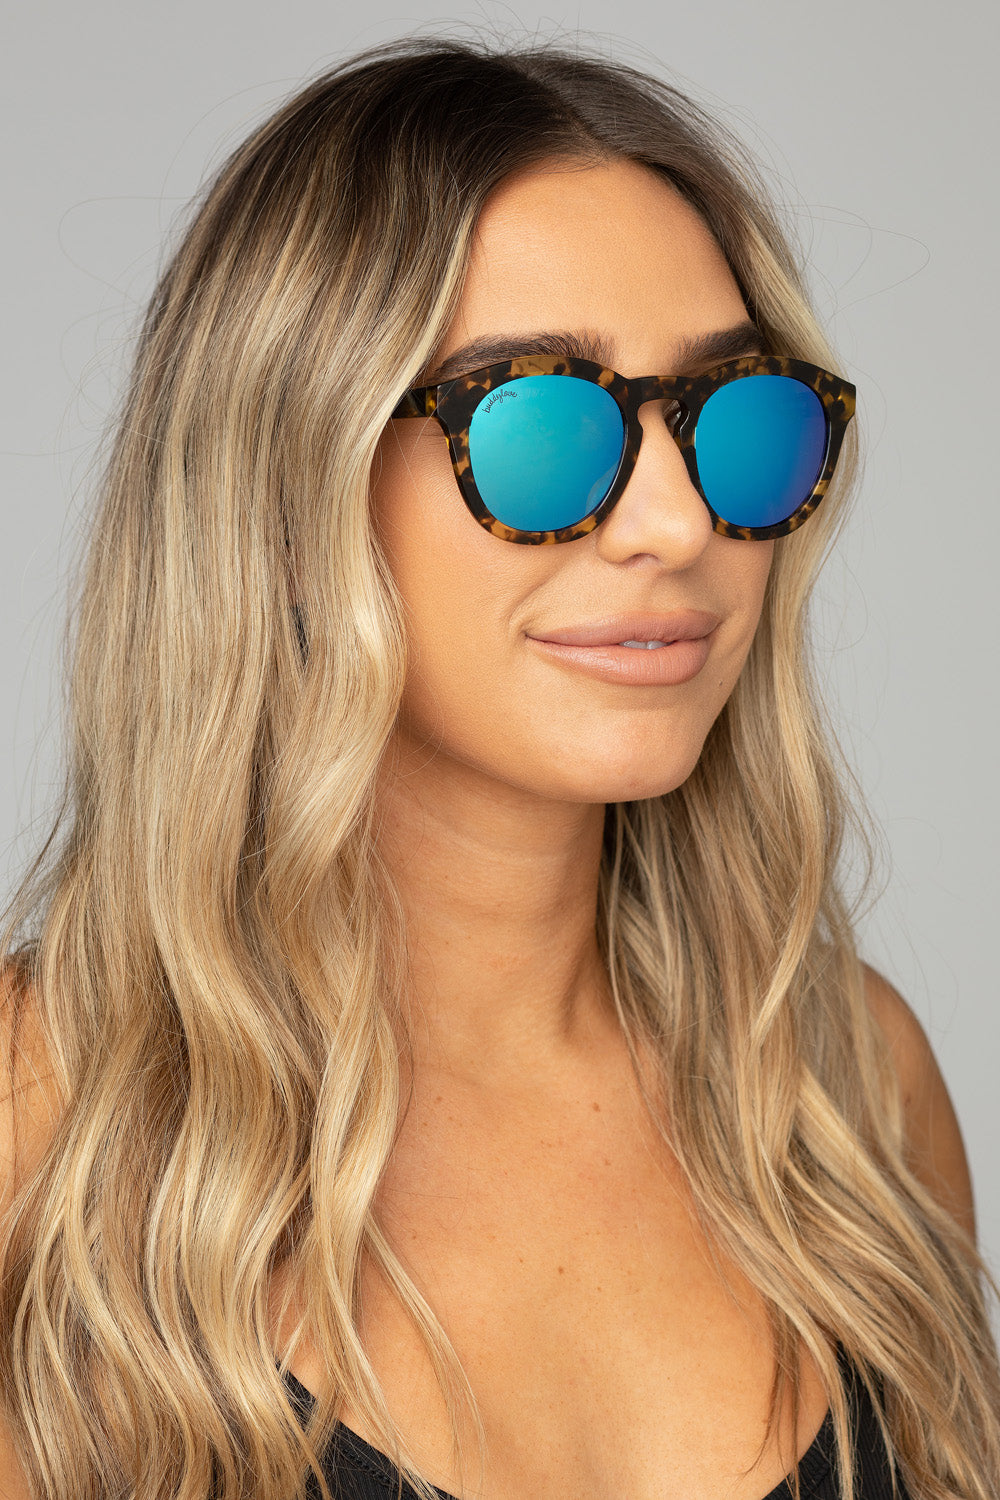 Val Acetate Framed Sunglasses- Blue